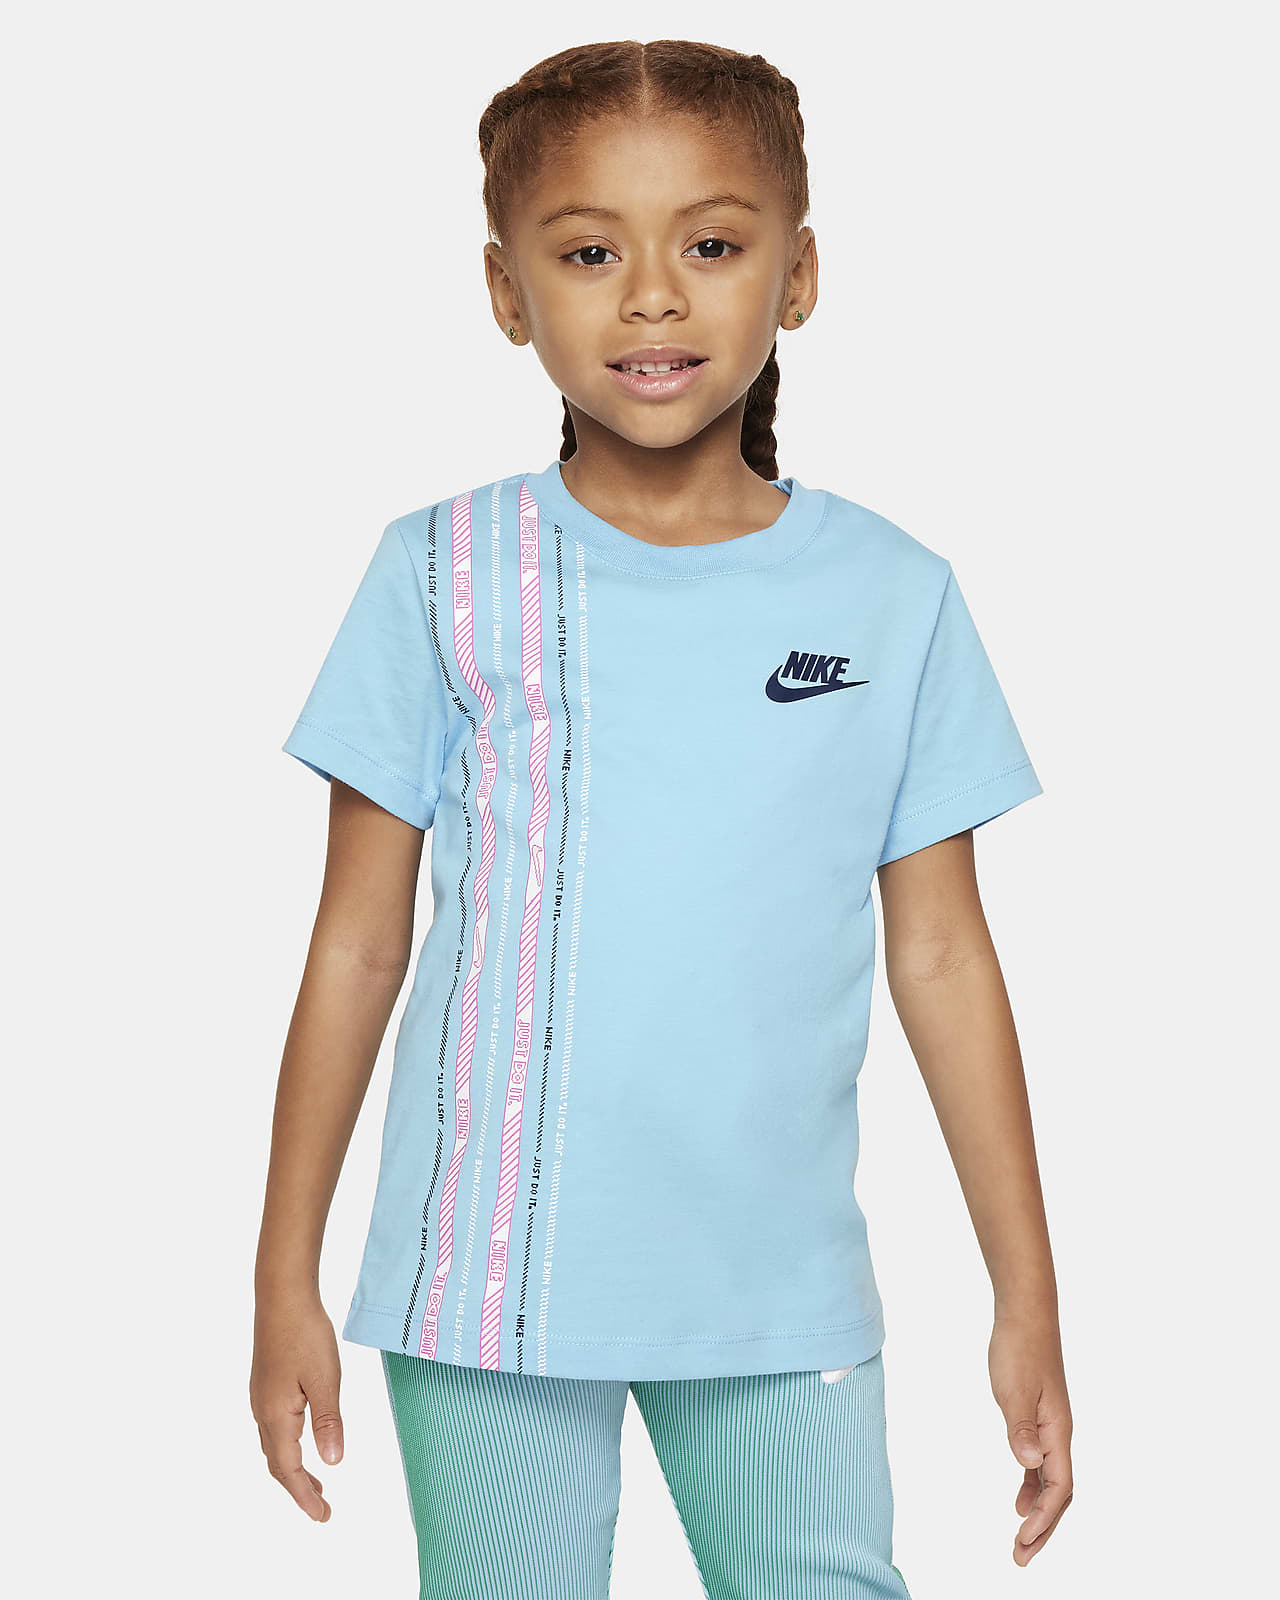 Nike Happy Camper Little Kids' Graphic T-Shirt